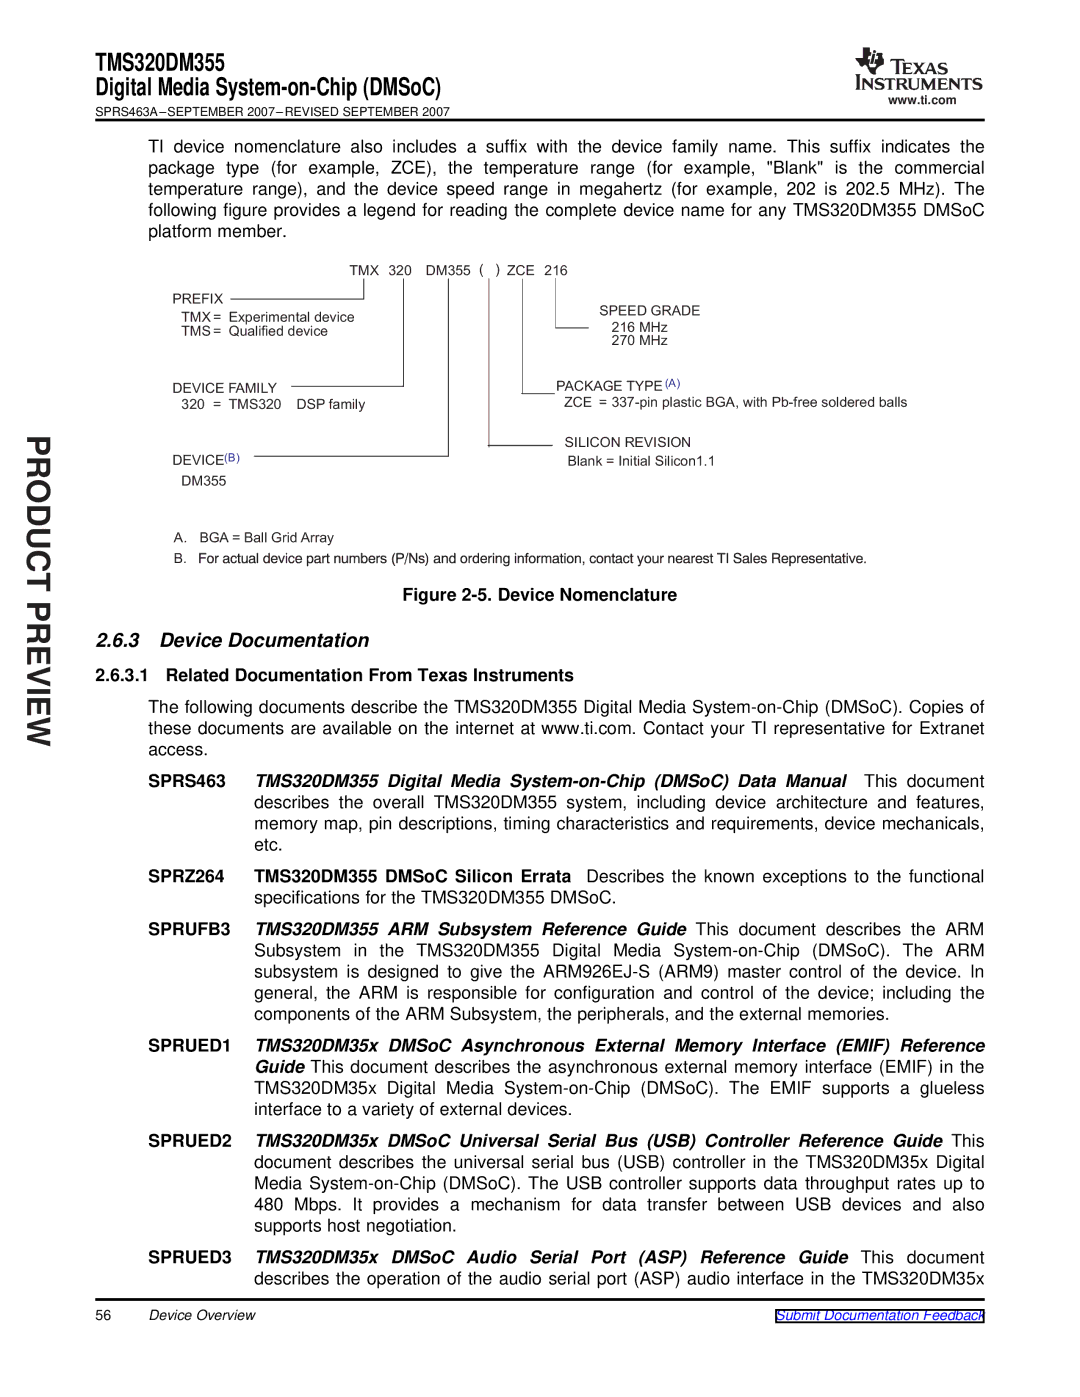 Texas Instruments TMS320DM355 warranty Device Documentation, Related Documentation From Texas Instruments 